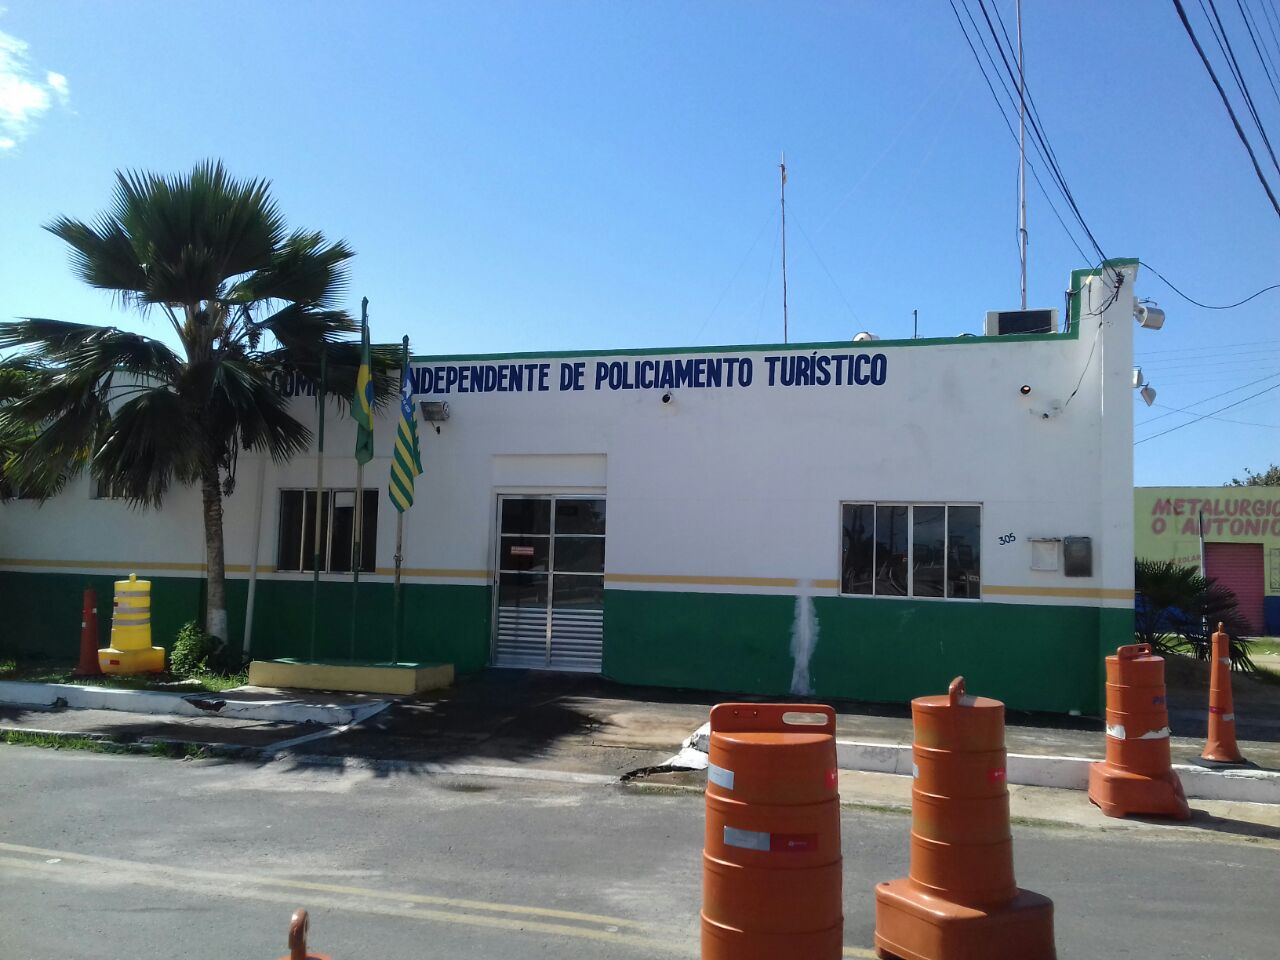 Companhia Independente de Policiamento Turístico, CIPTUR